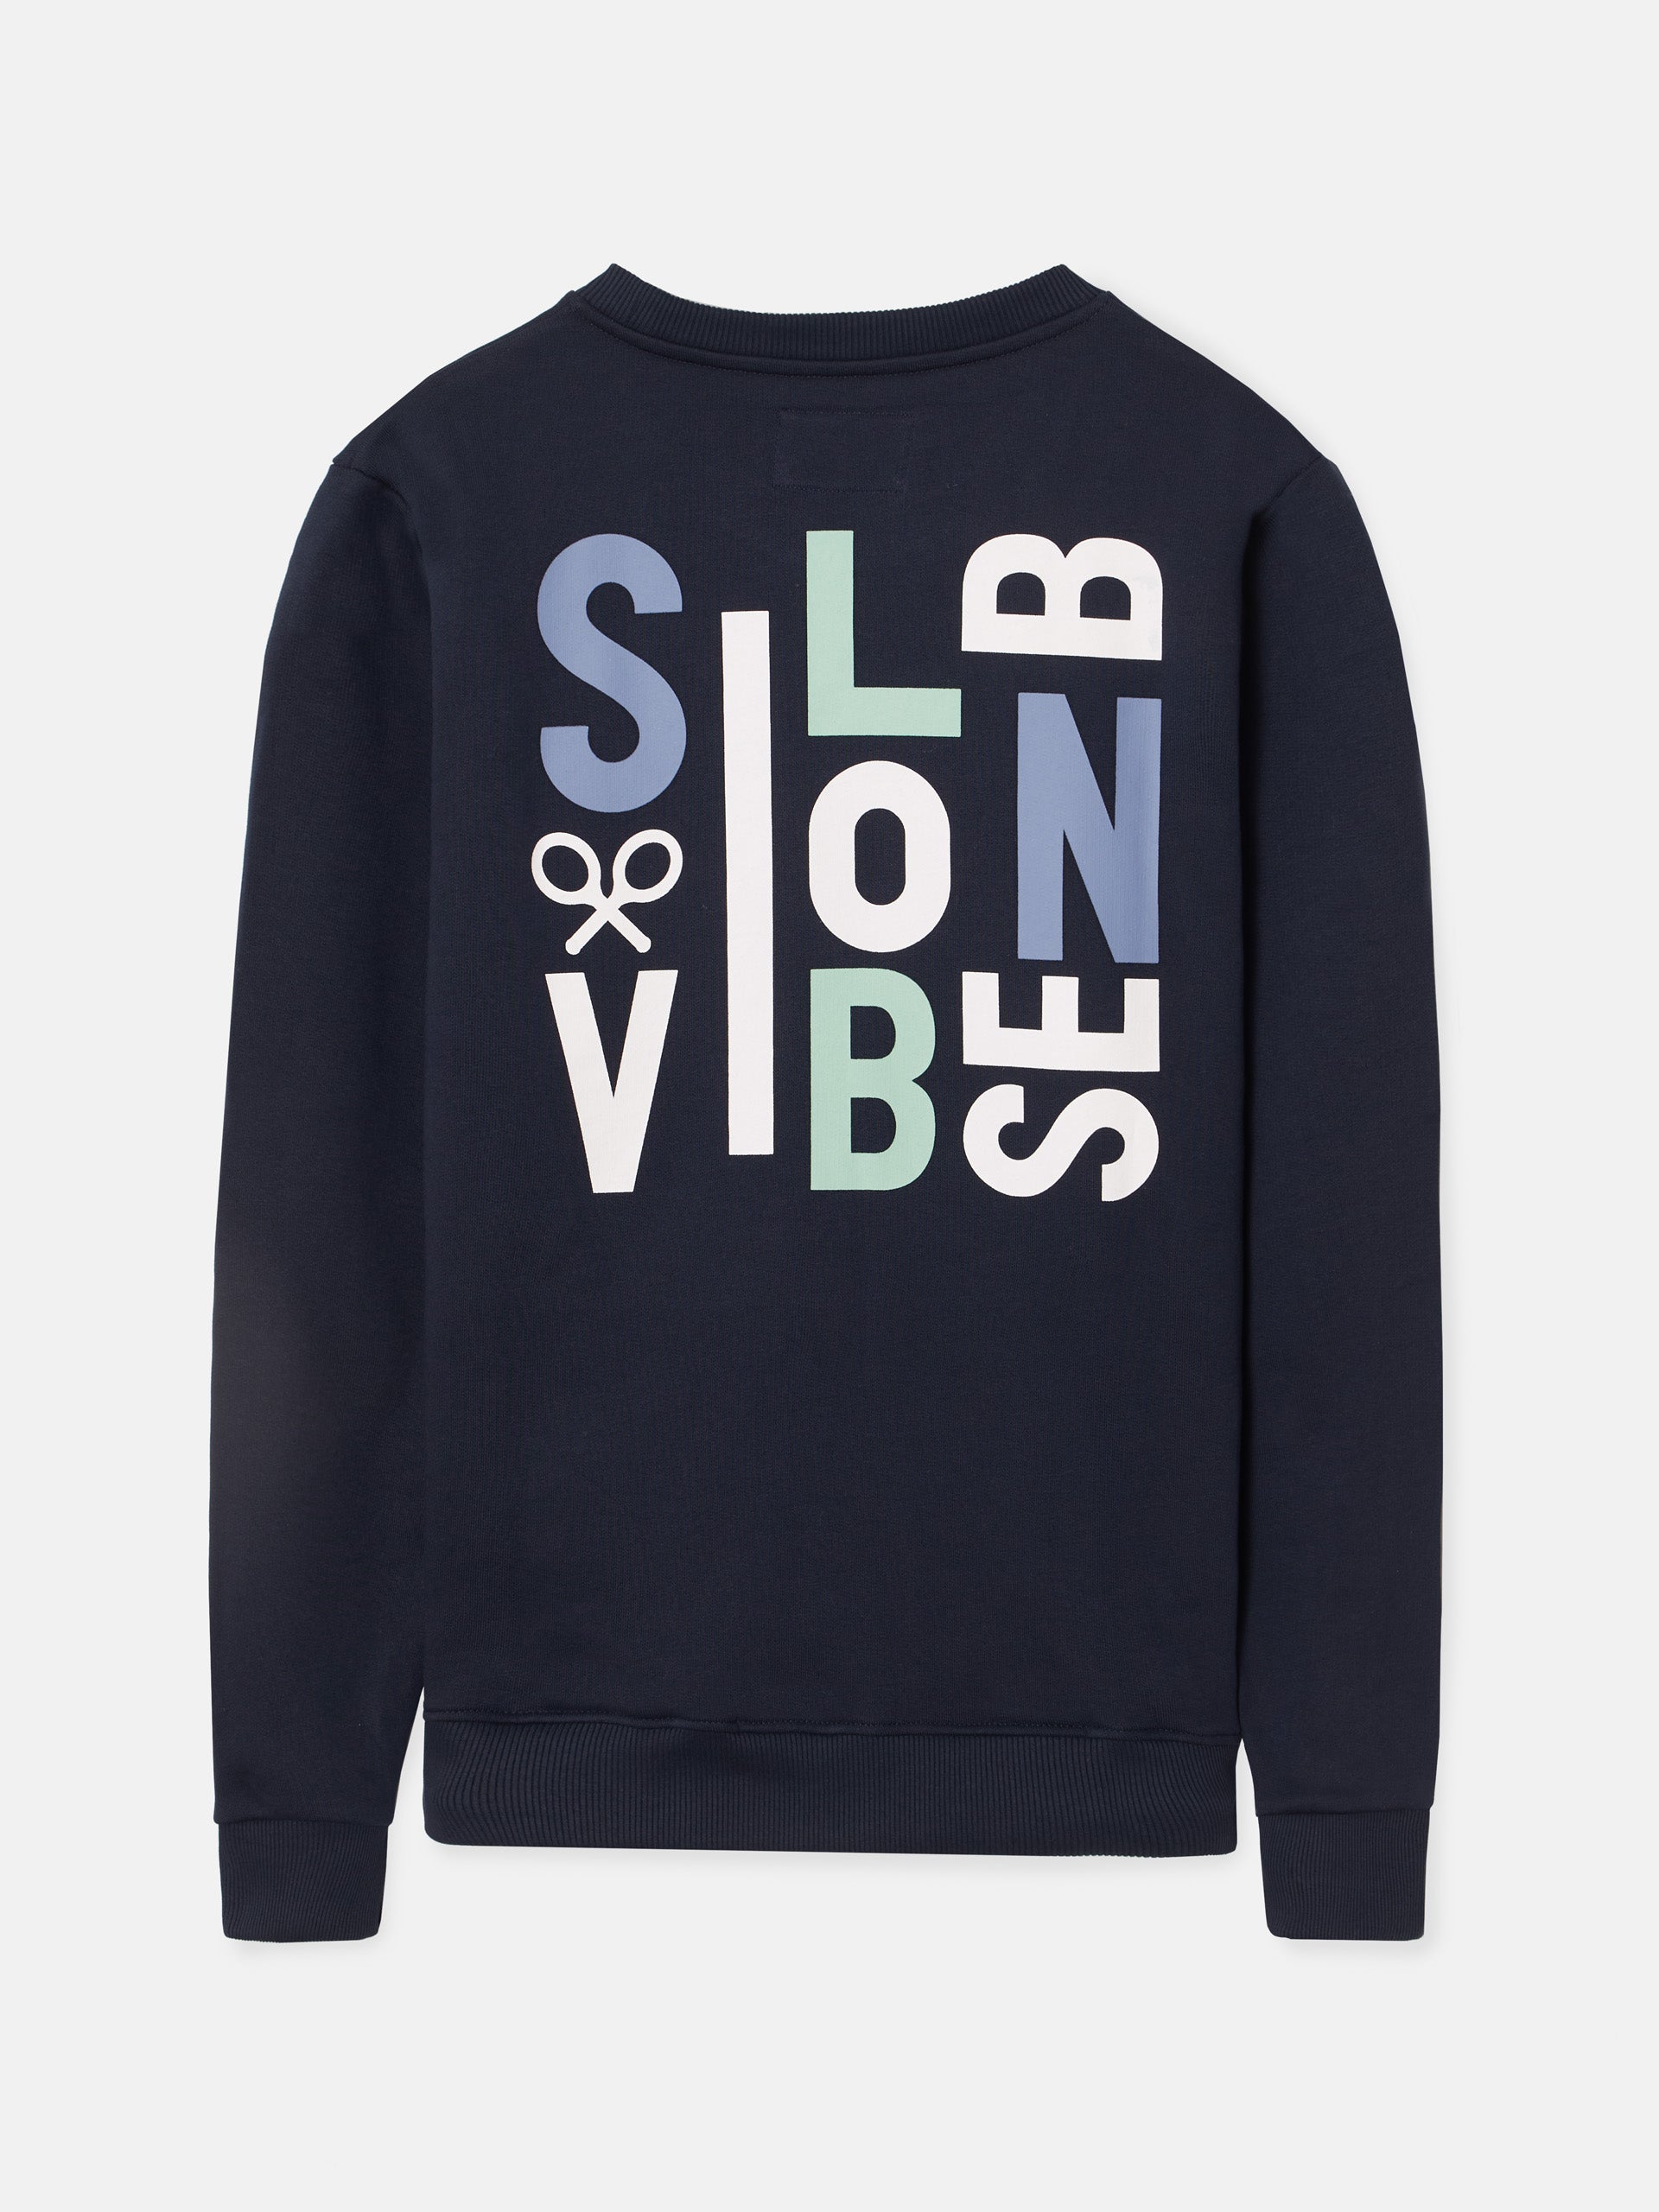 Silbon vibes navy blue letter sweatshirt